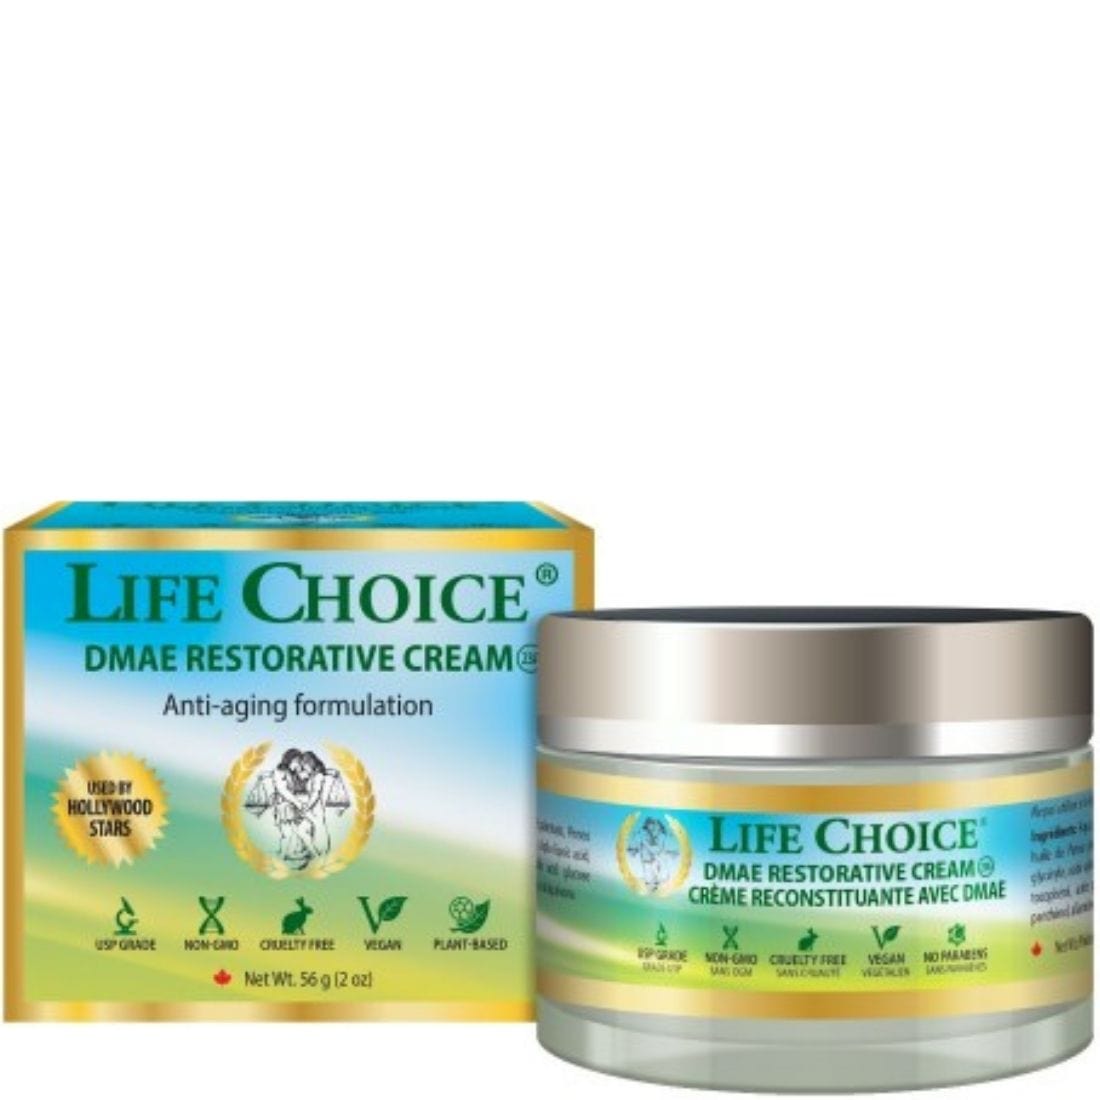 Life Choice Regenerate Cream (Formerly DMAE Restorative Cream), 30ml